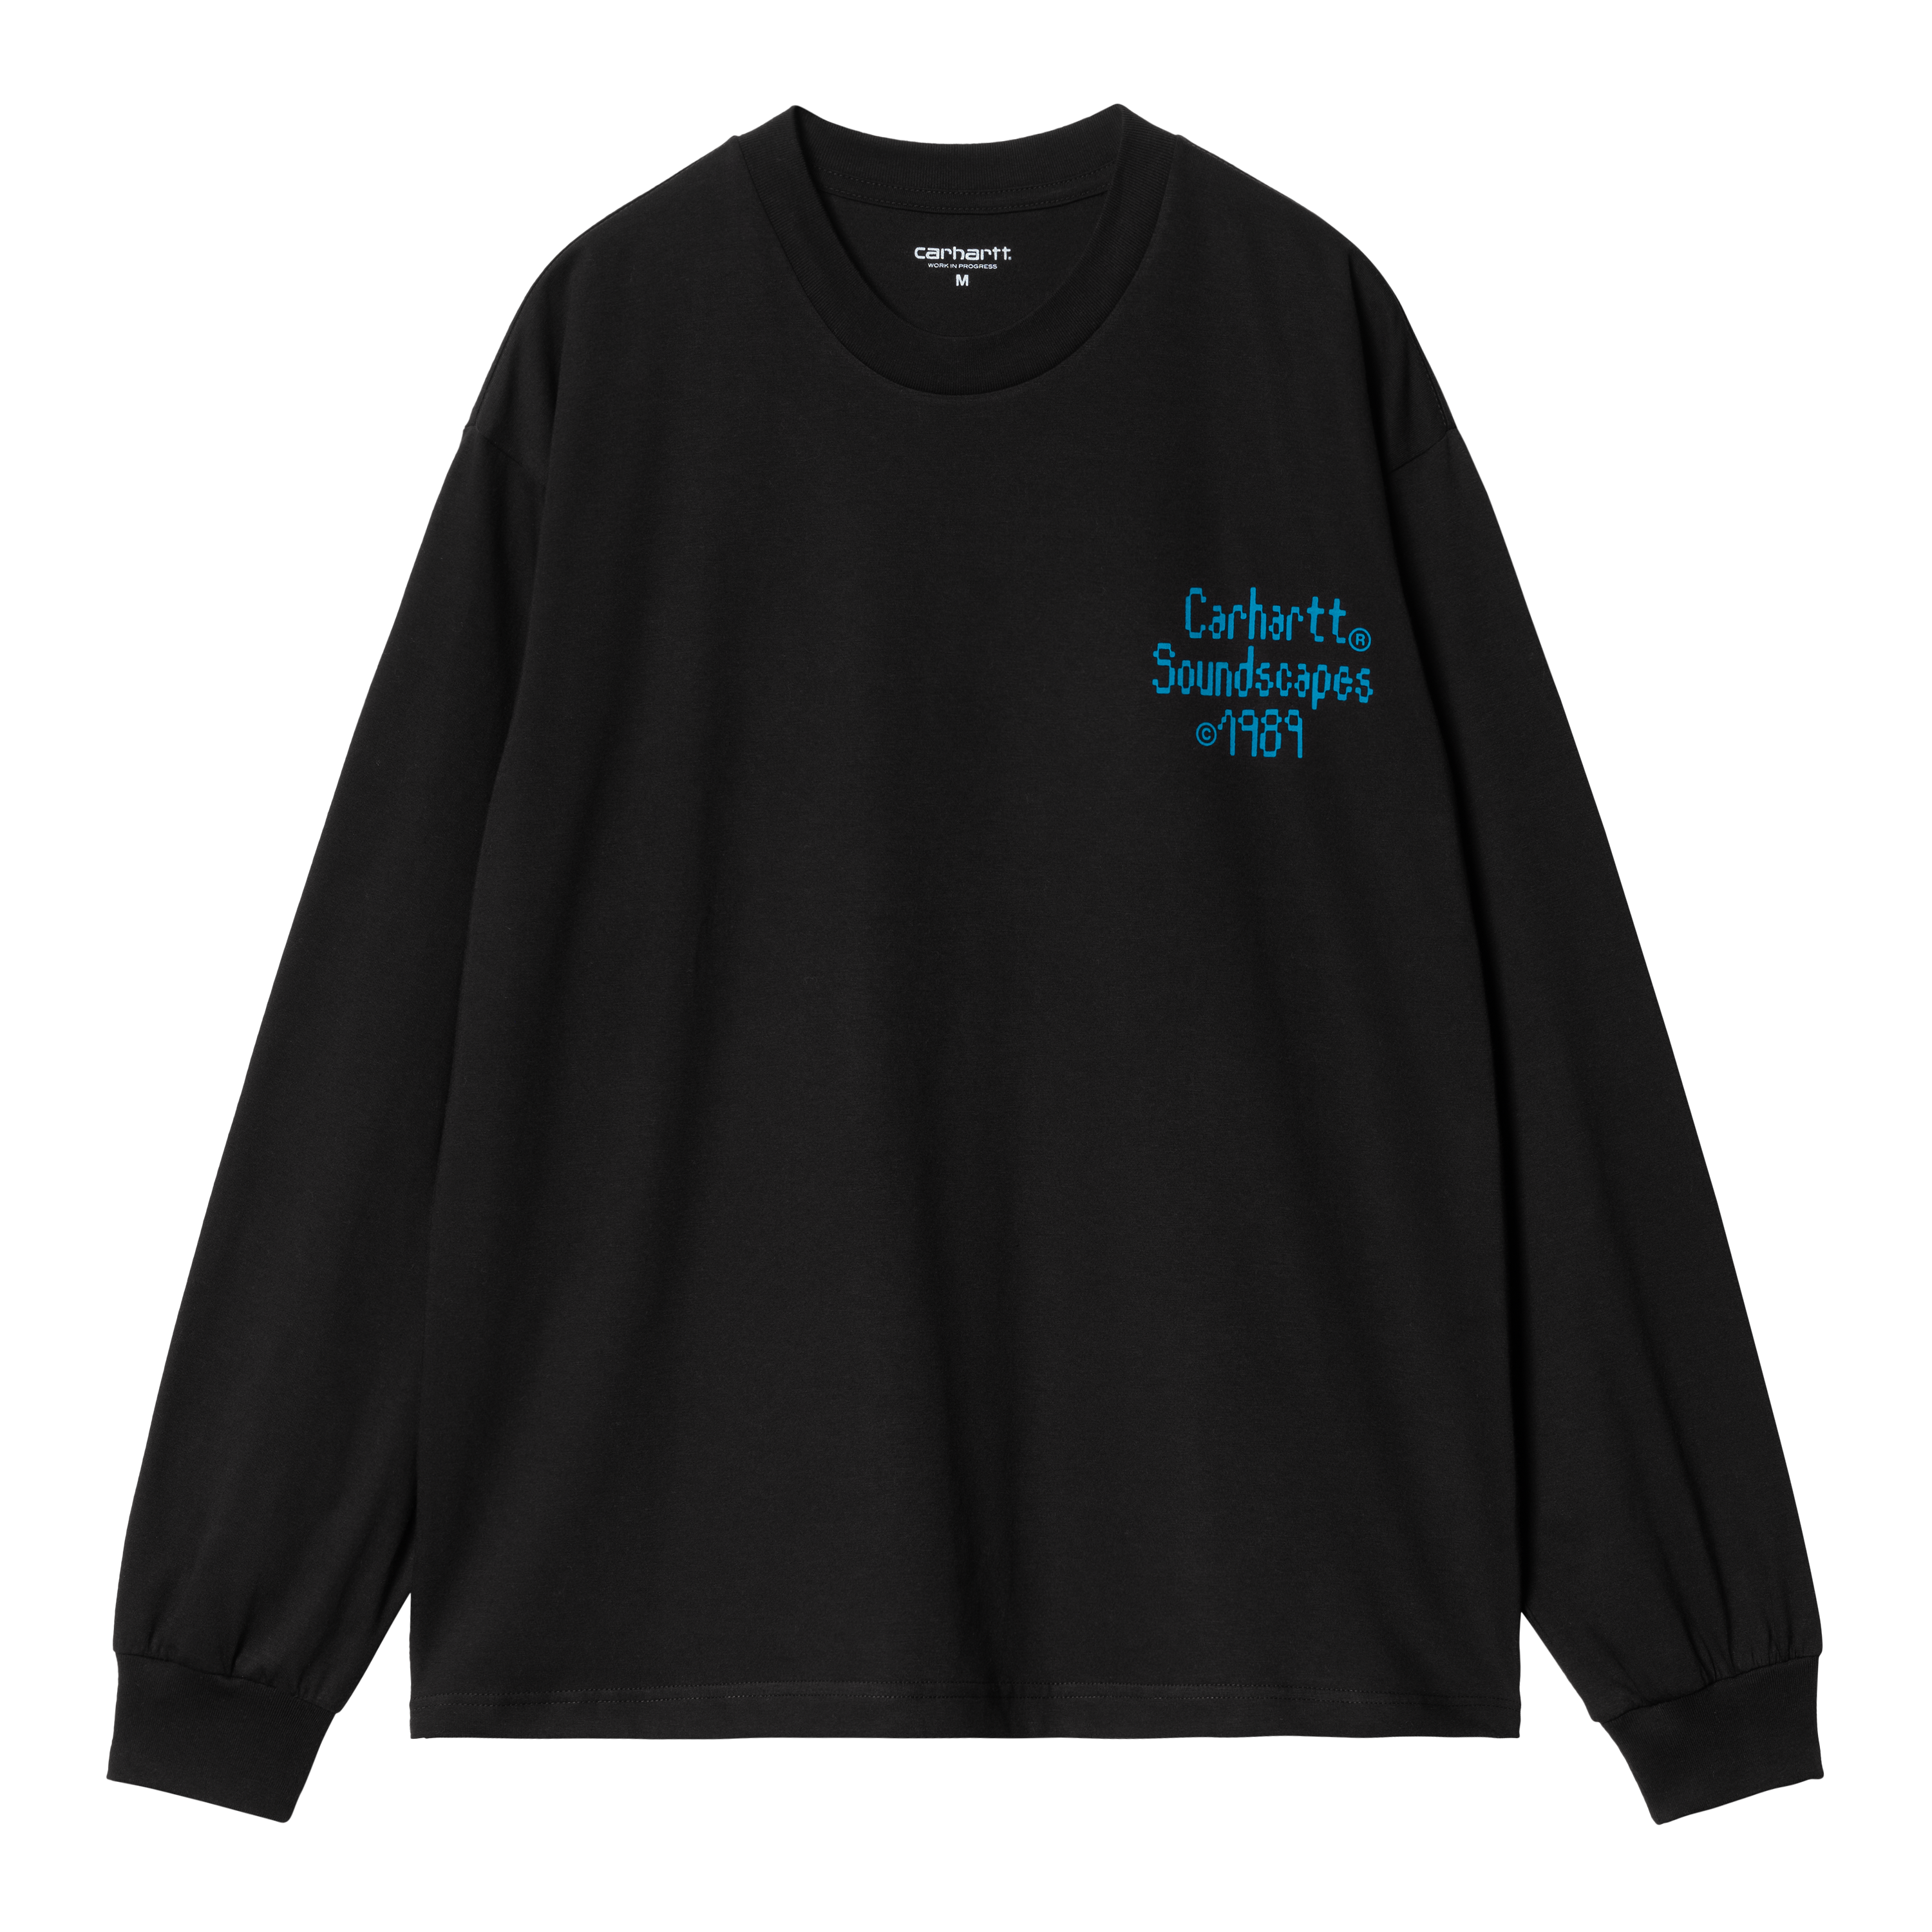 Carhartt WIP Long Sleeve Soundface T-Shirt in Black